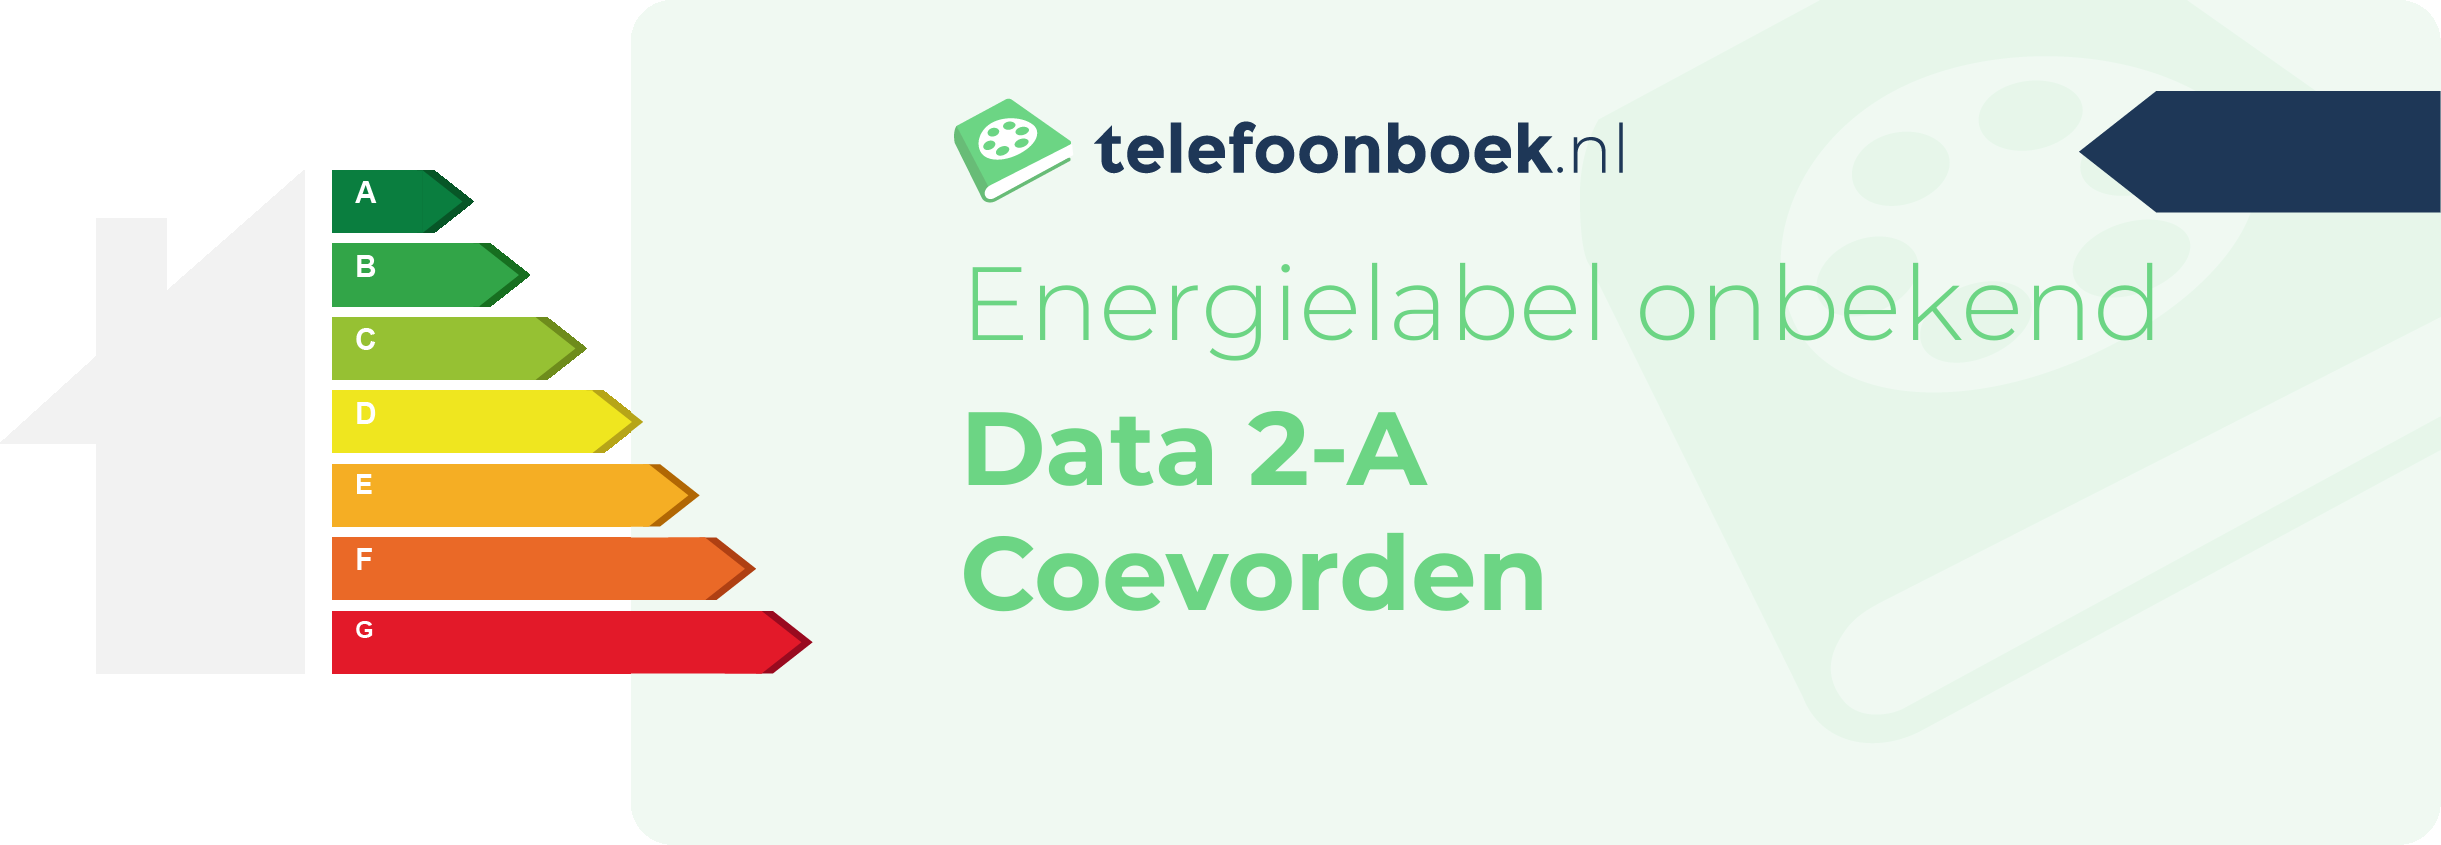 Energielabel Data 2-A Coevorden